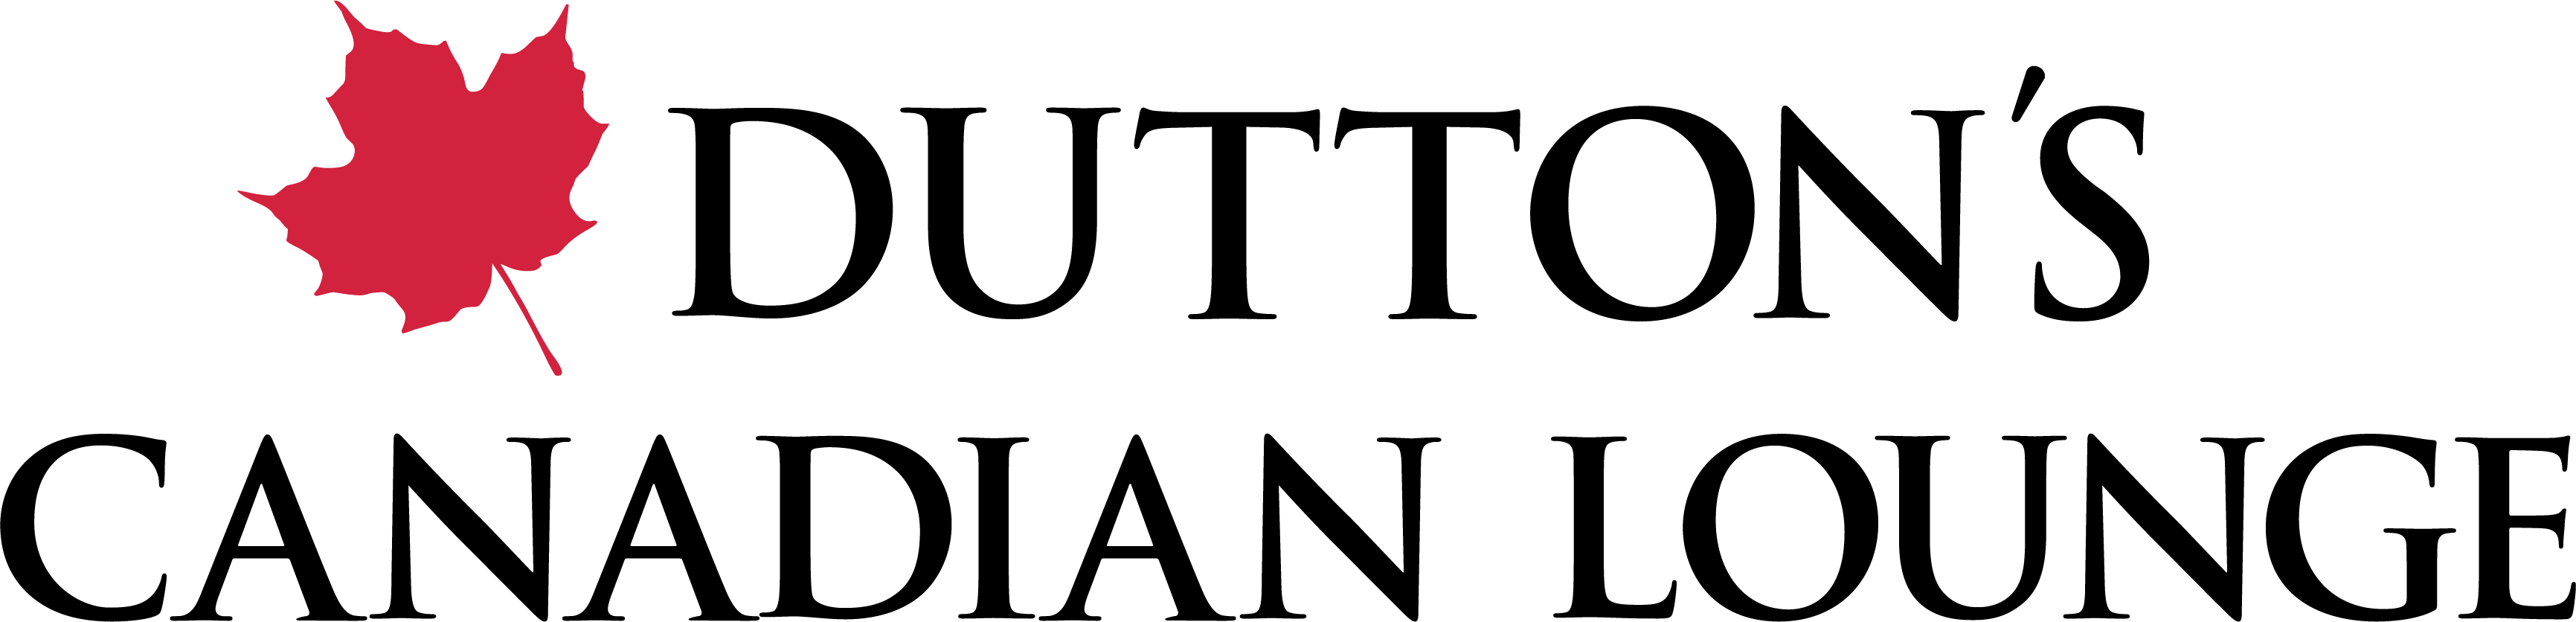 Dutton's Canadian Lounge logo in colour